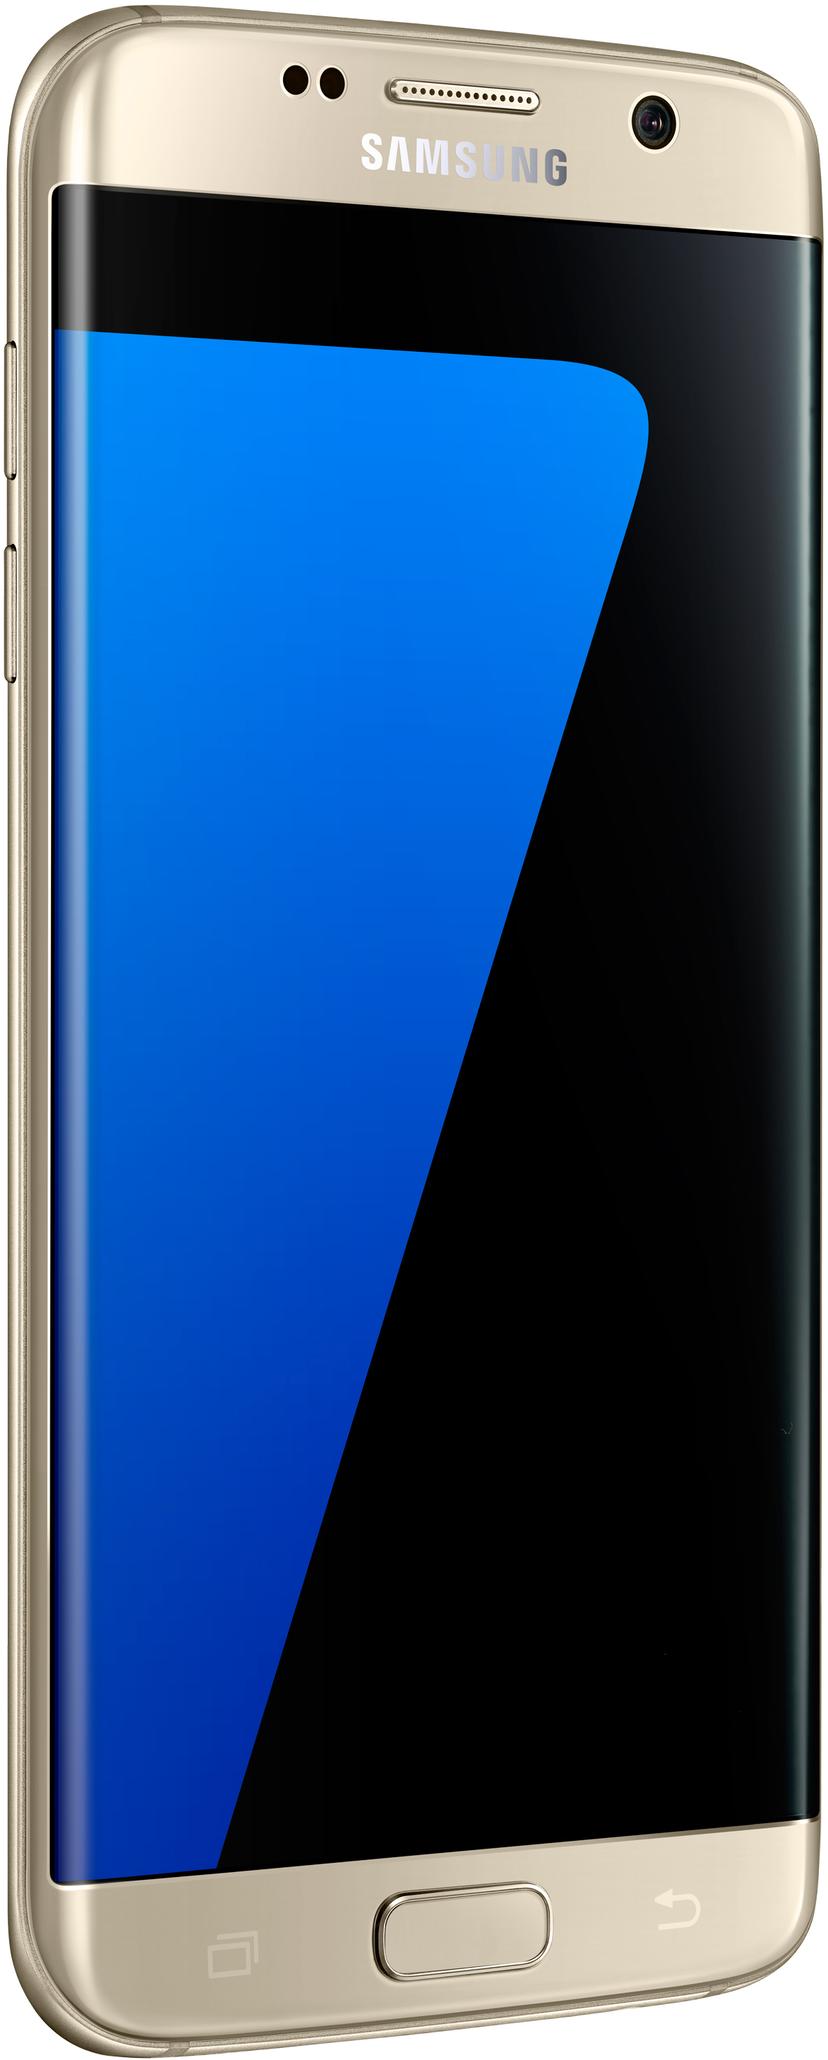 Samsung Galaxy S7 Edge 32GB Guld platinium